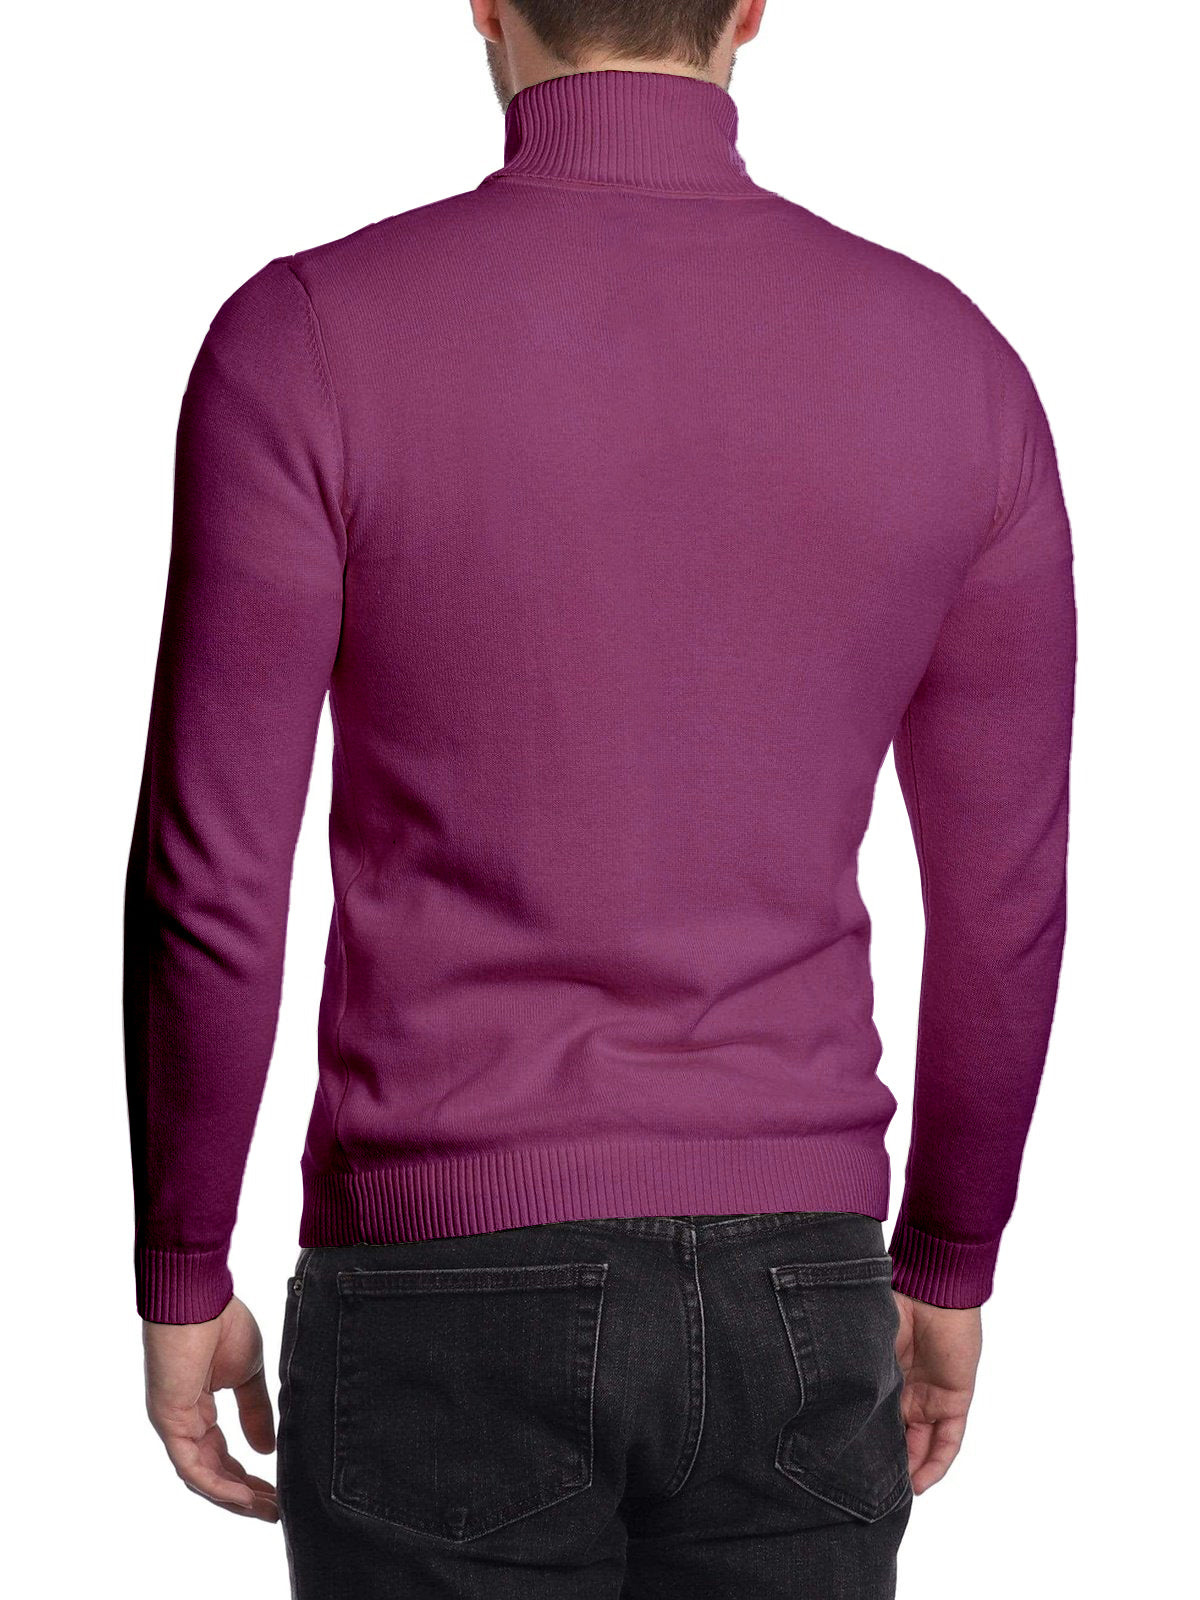 Arthur Black Men's Solid Purple Pullover Cotton Blend Turtleneck Sweater Shirt